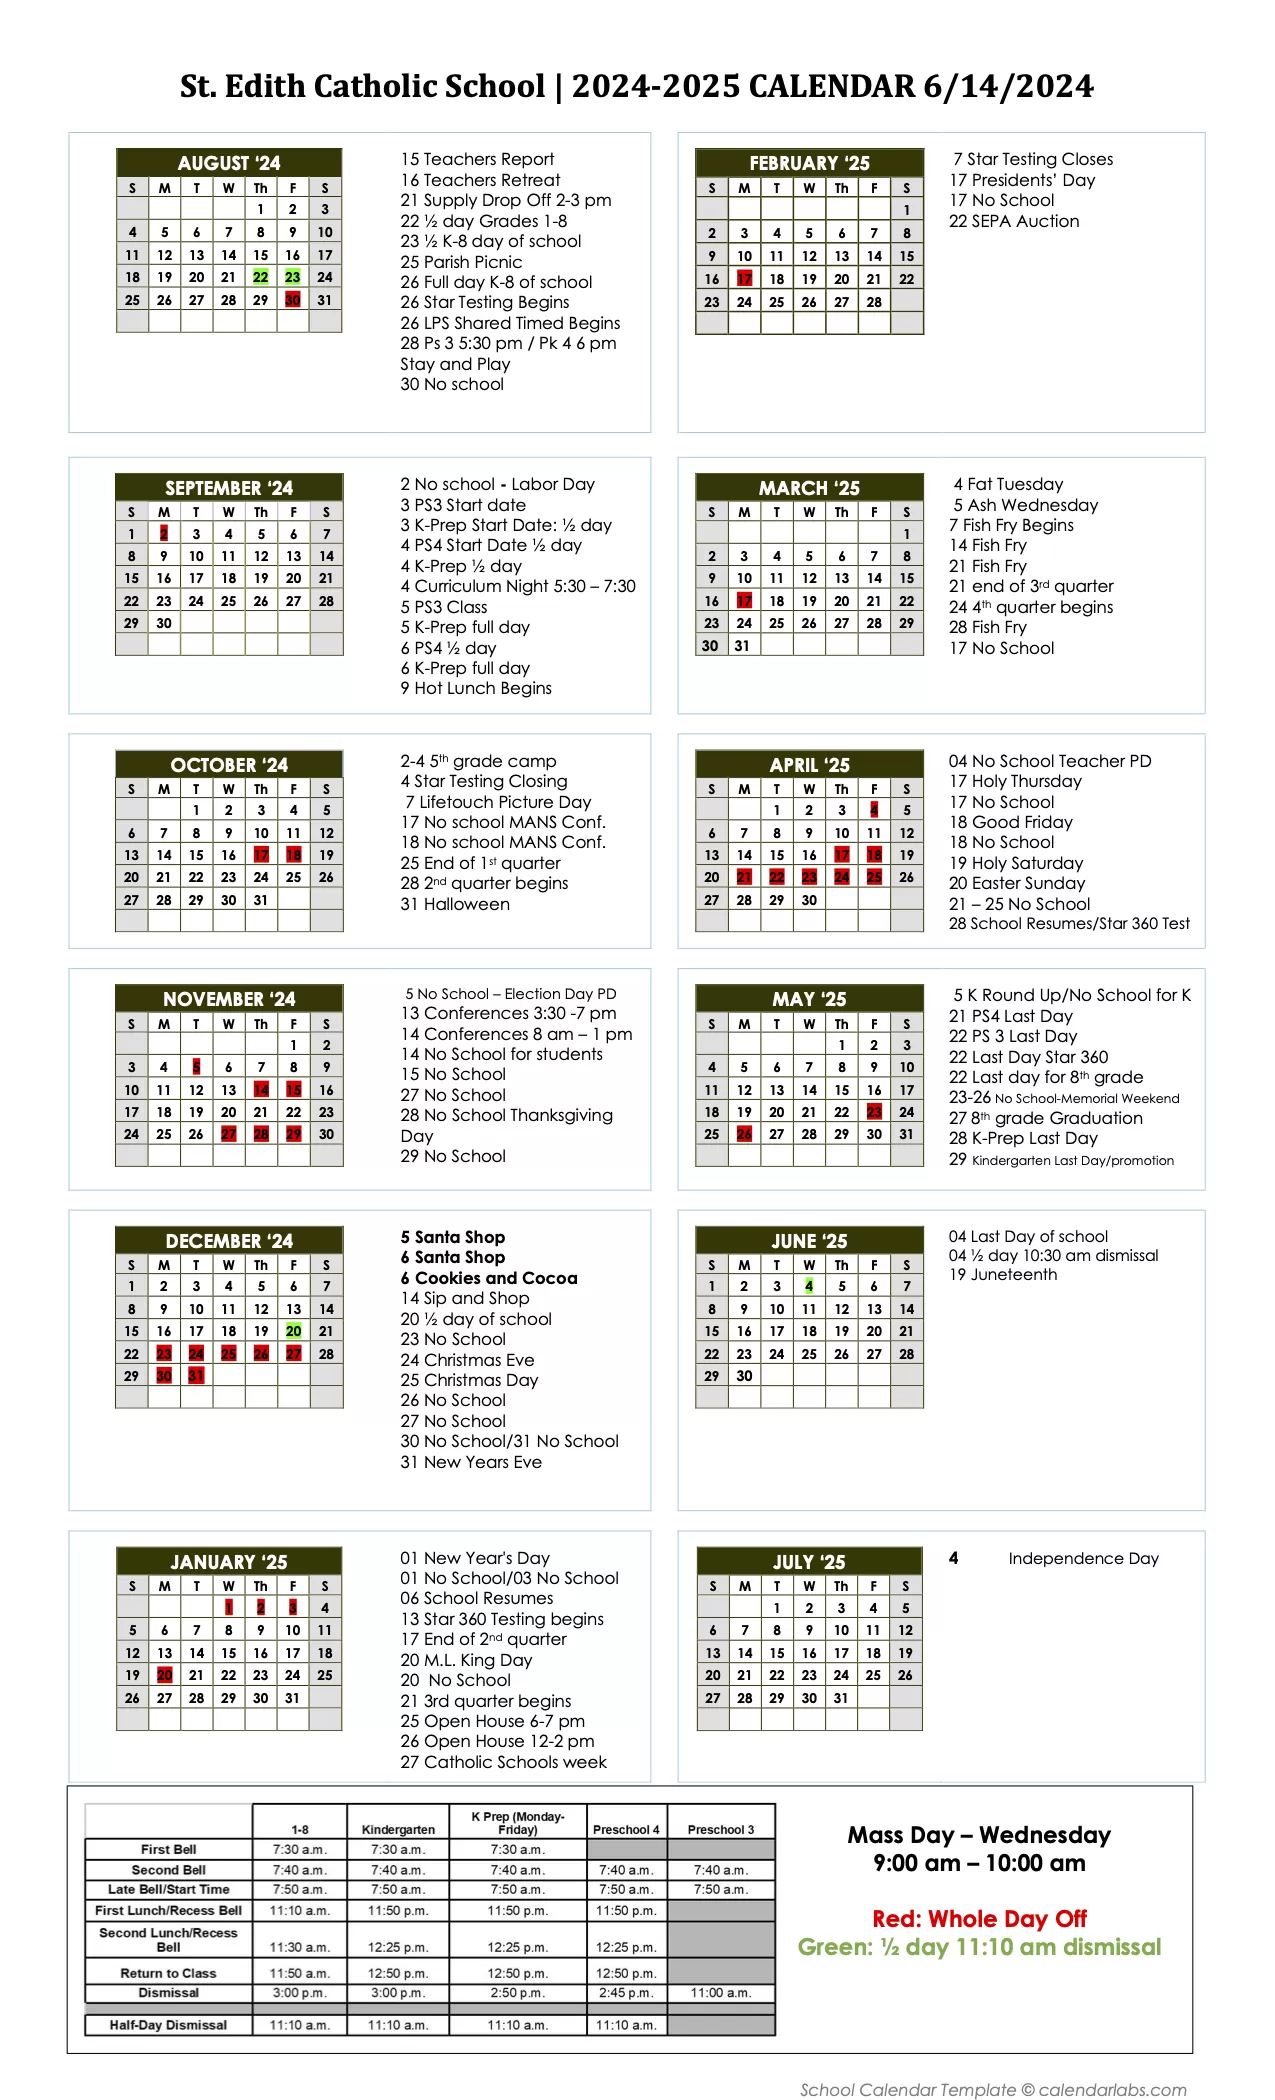 Tentative 24-25 School Calendar